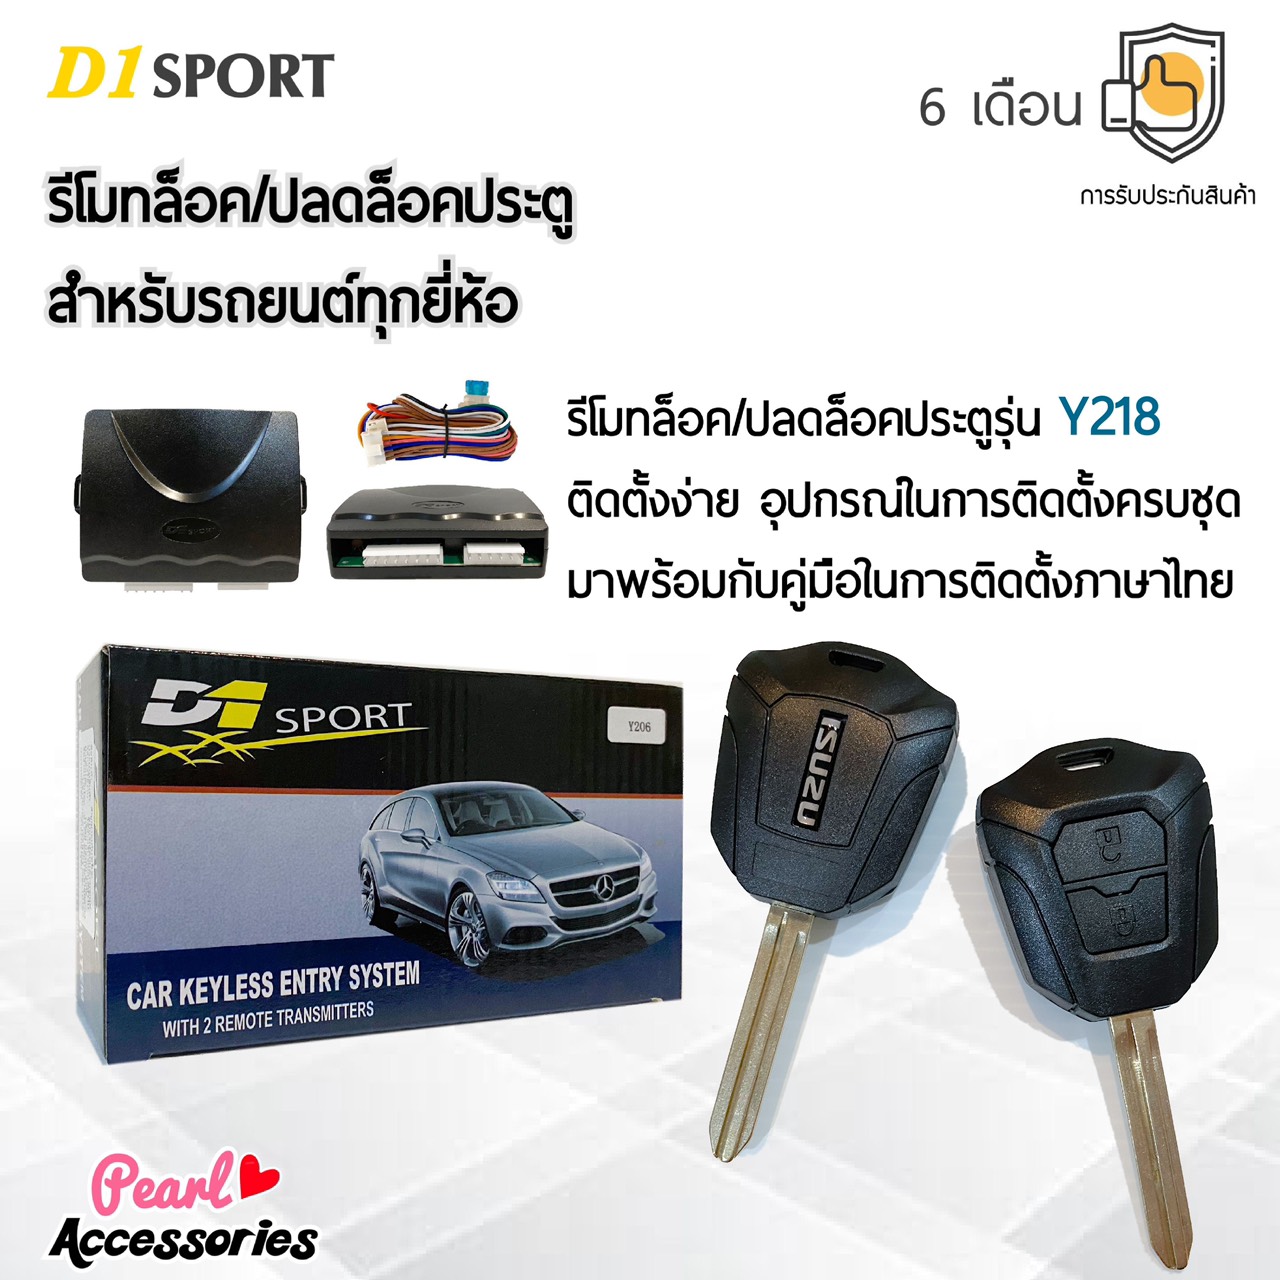 D1 Sport รีโมทล็อค/ปลดล็อคประตูรถยนต์ Y218 กุญแจทรง Isuzu สำหรับรถยนต์ทุกยี่ห้อ อุปกรณ์ในการติดตั้งครบชุด (คู่มือในการติดตั้งภาษาไทย) Car keyless